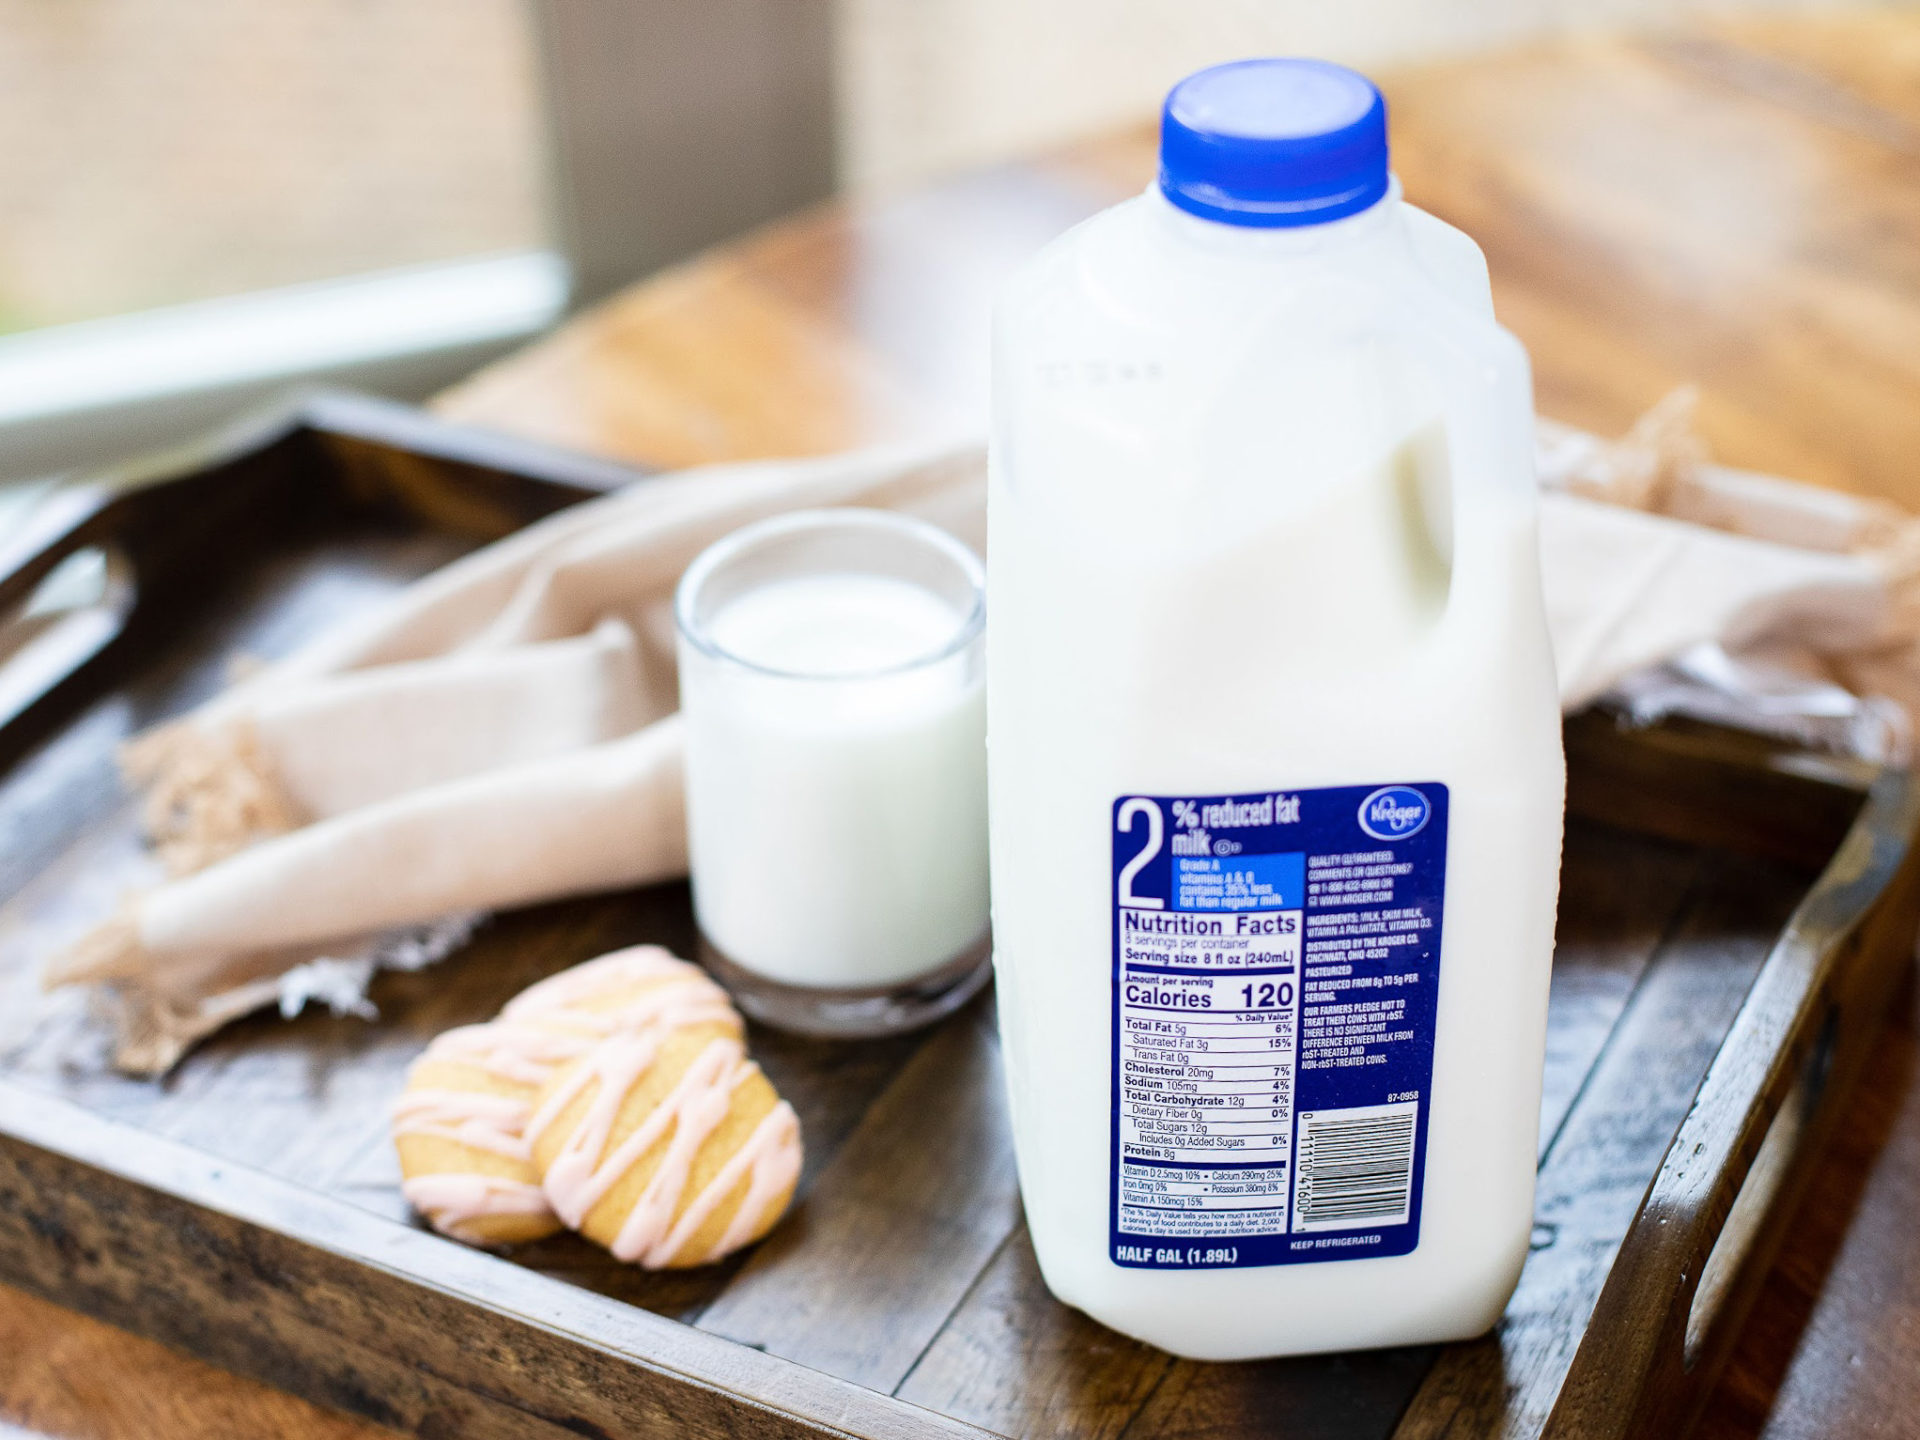 Half Gallons Of Kroger Milk Are Just 99¢ At Kroger